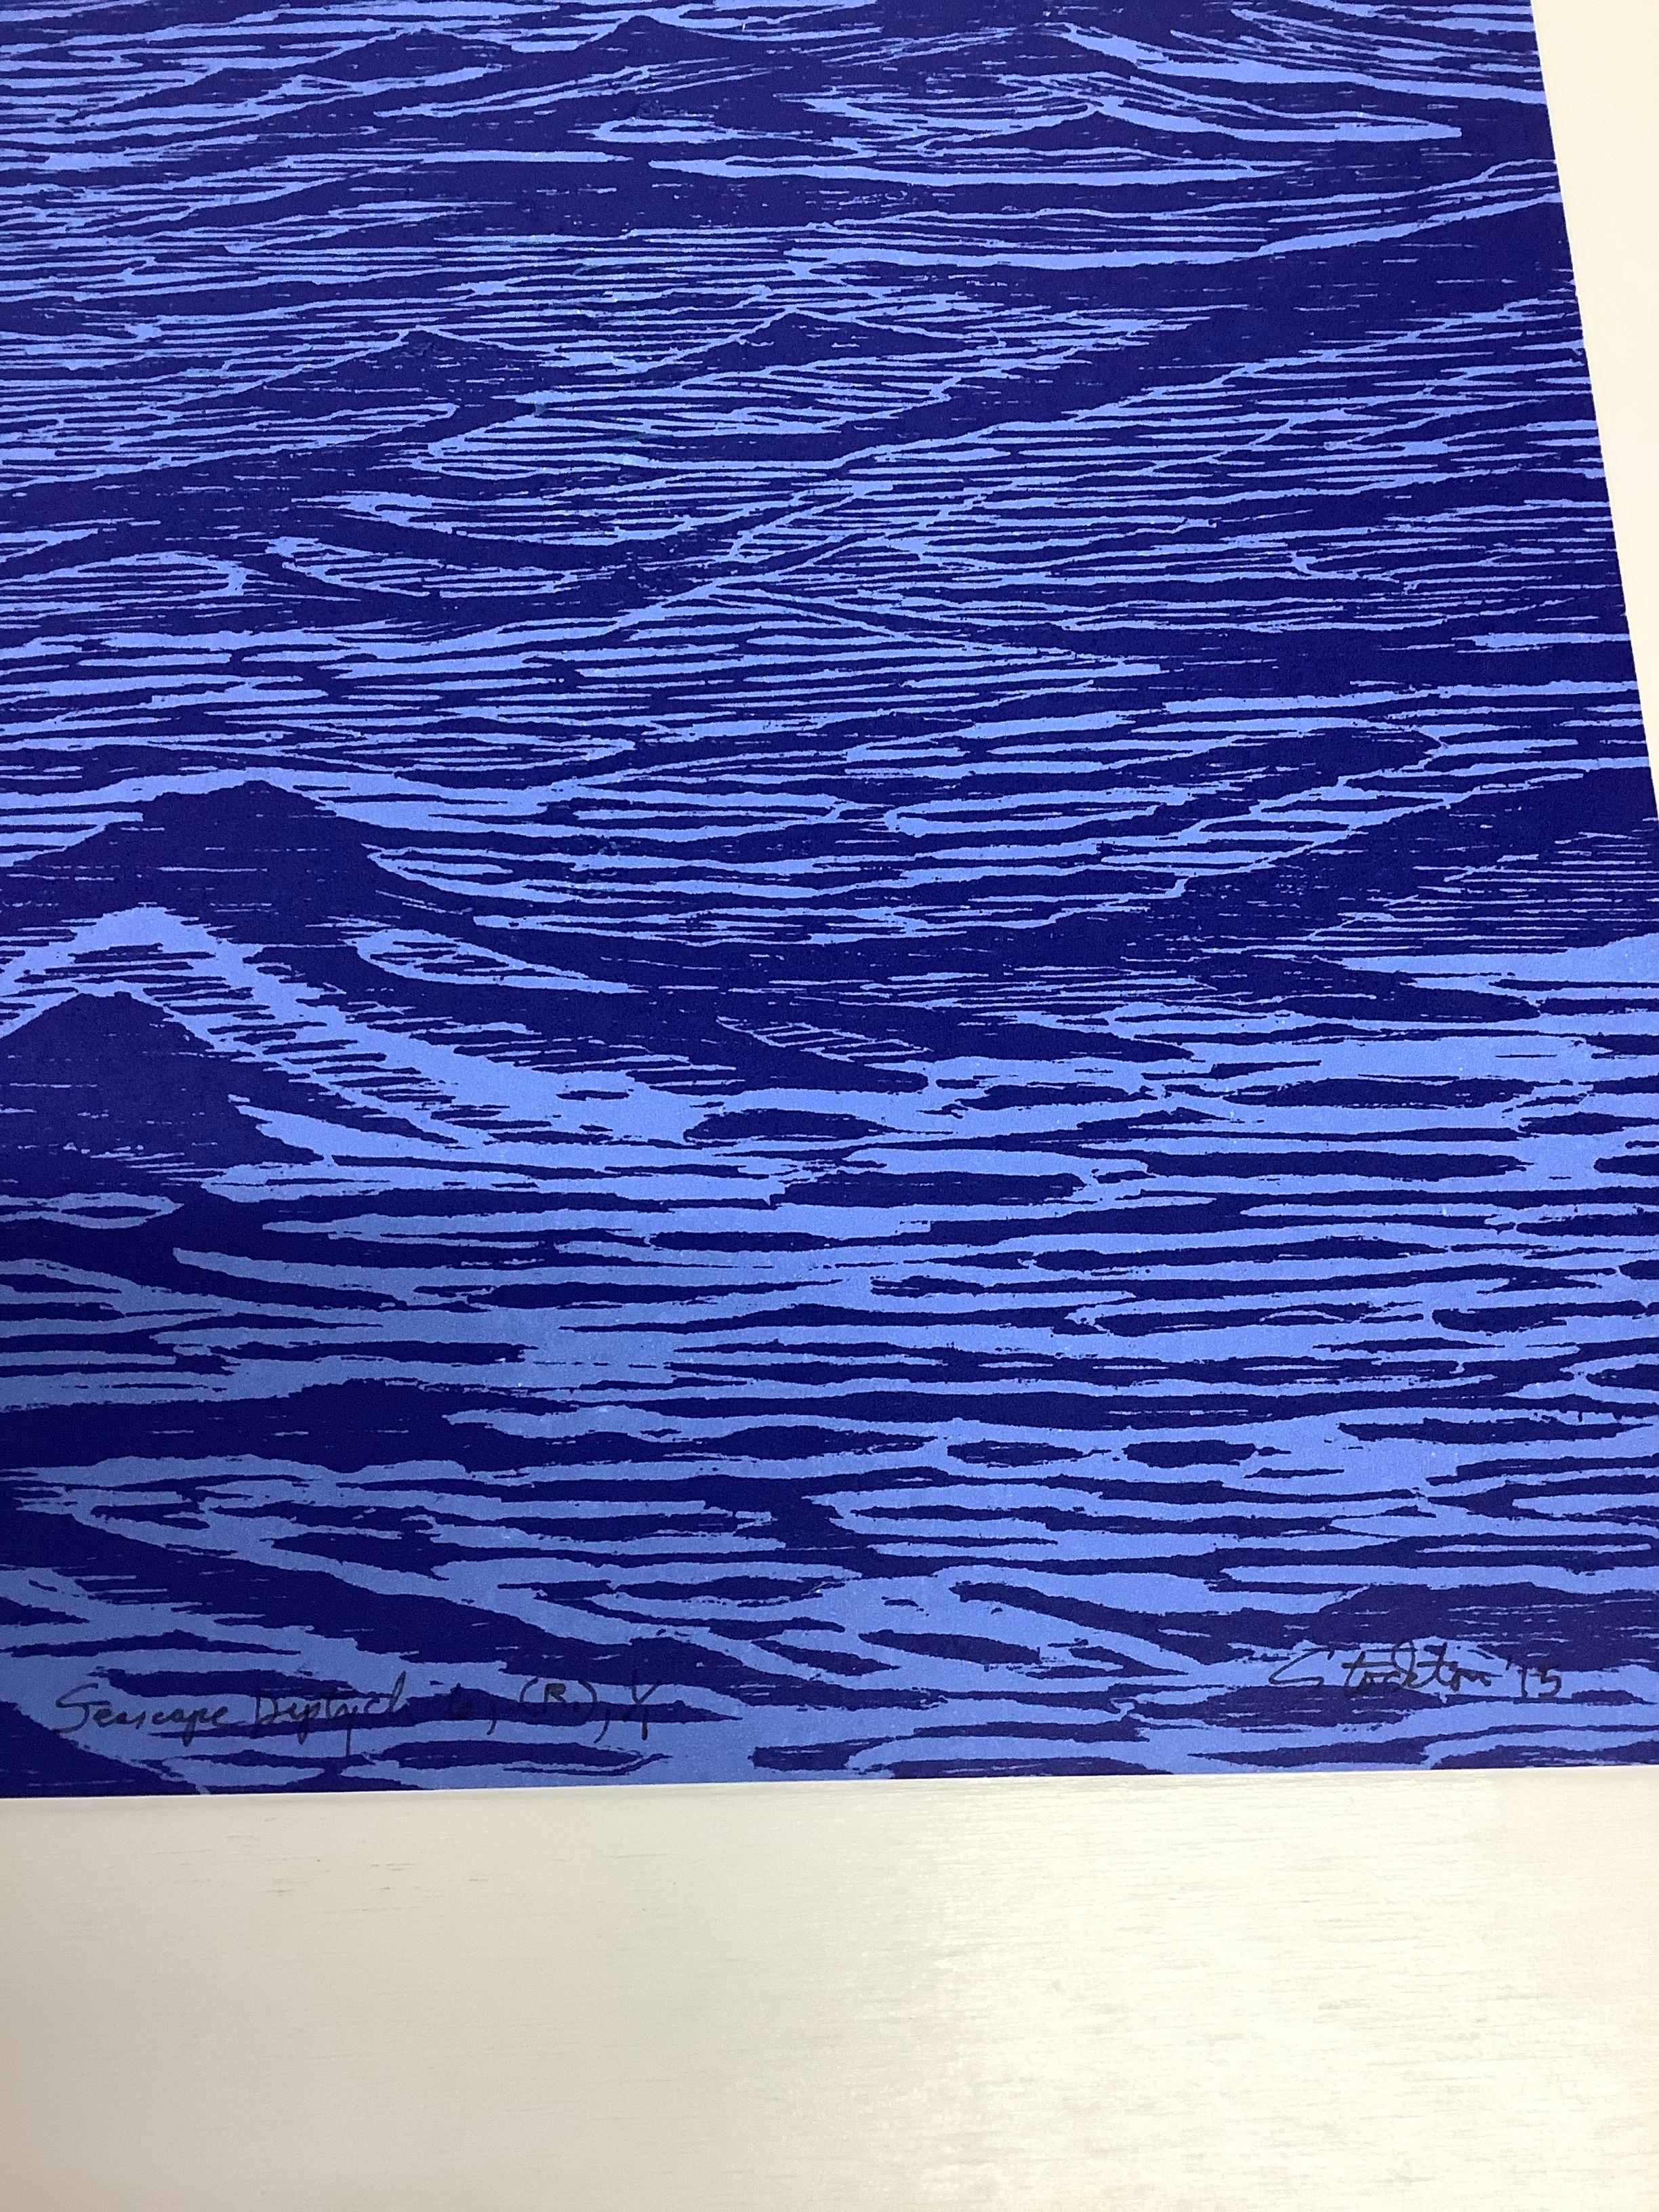 Seascape Diptych Six, Cobalt Blue Horizontal Seascape, Waves Woodcut Print   For Sale 14